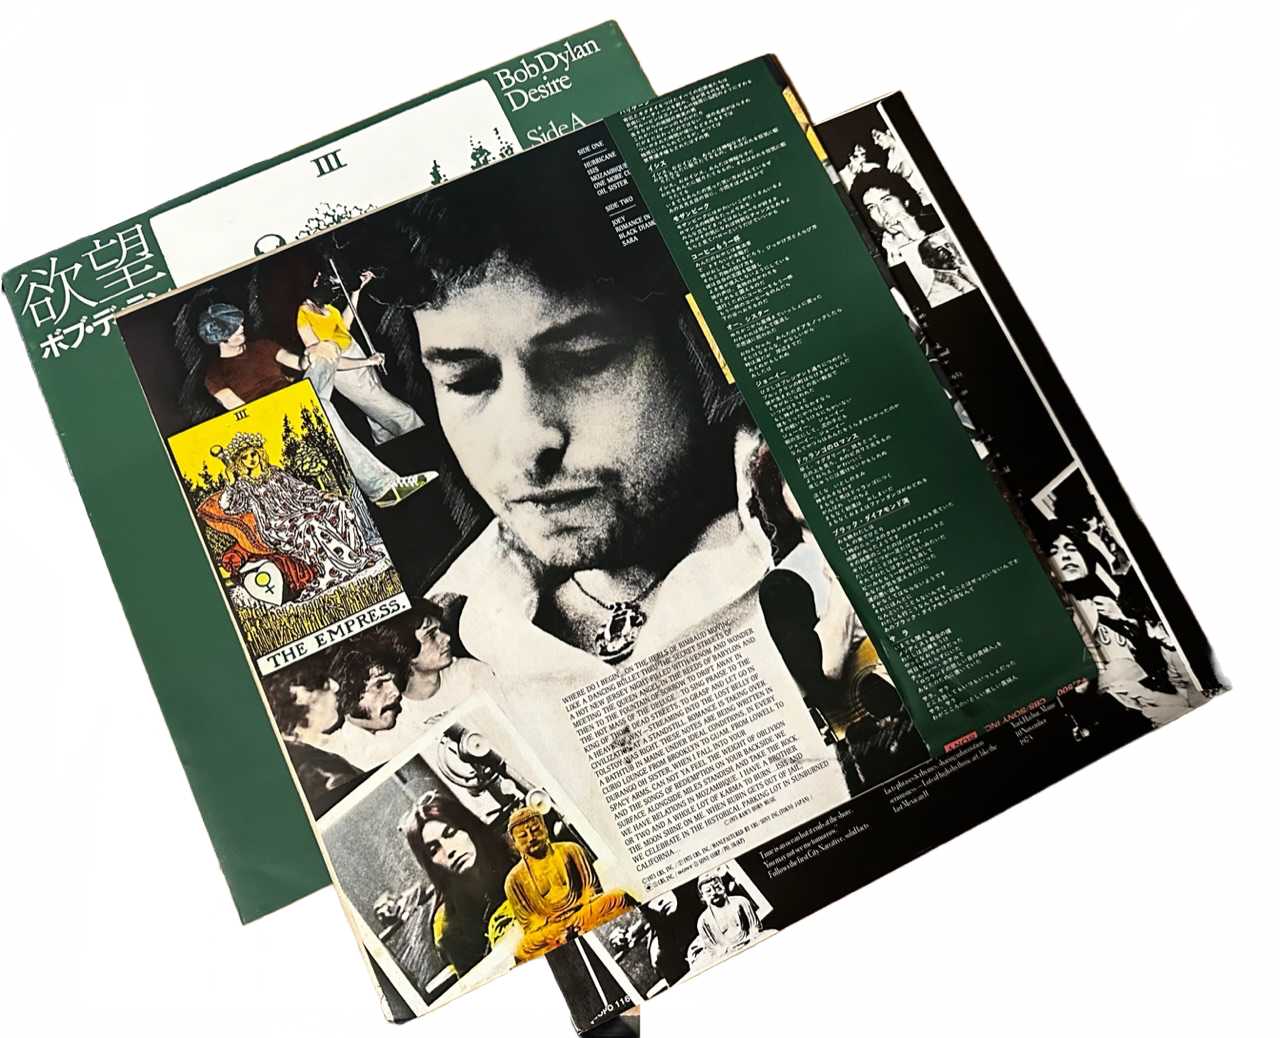 Bob Dylan - Desire [Japanese Vinyl]